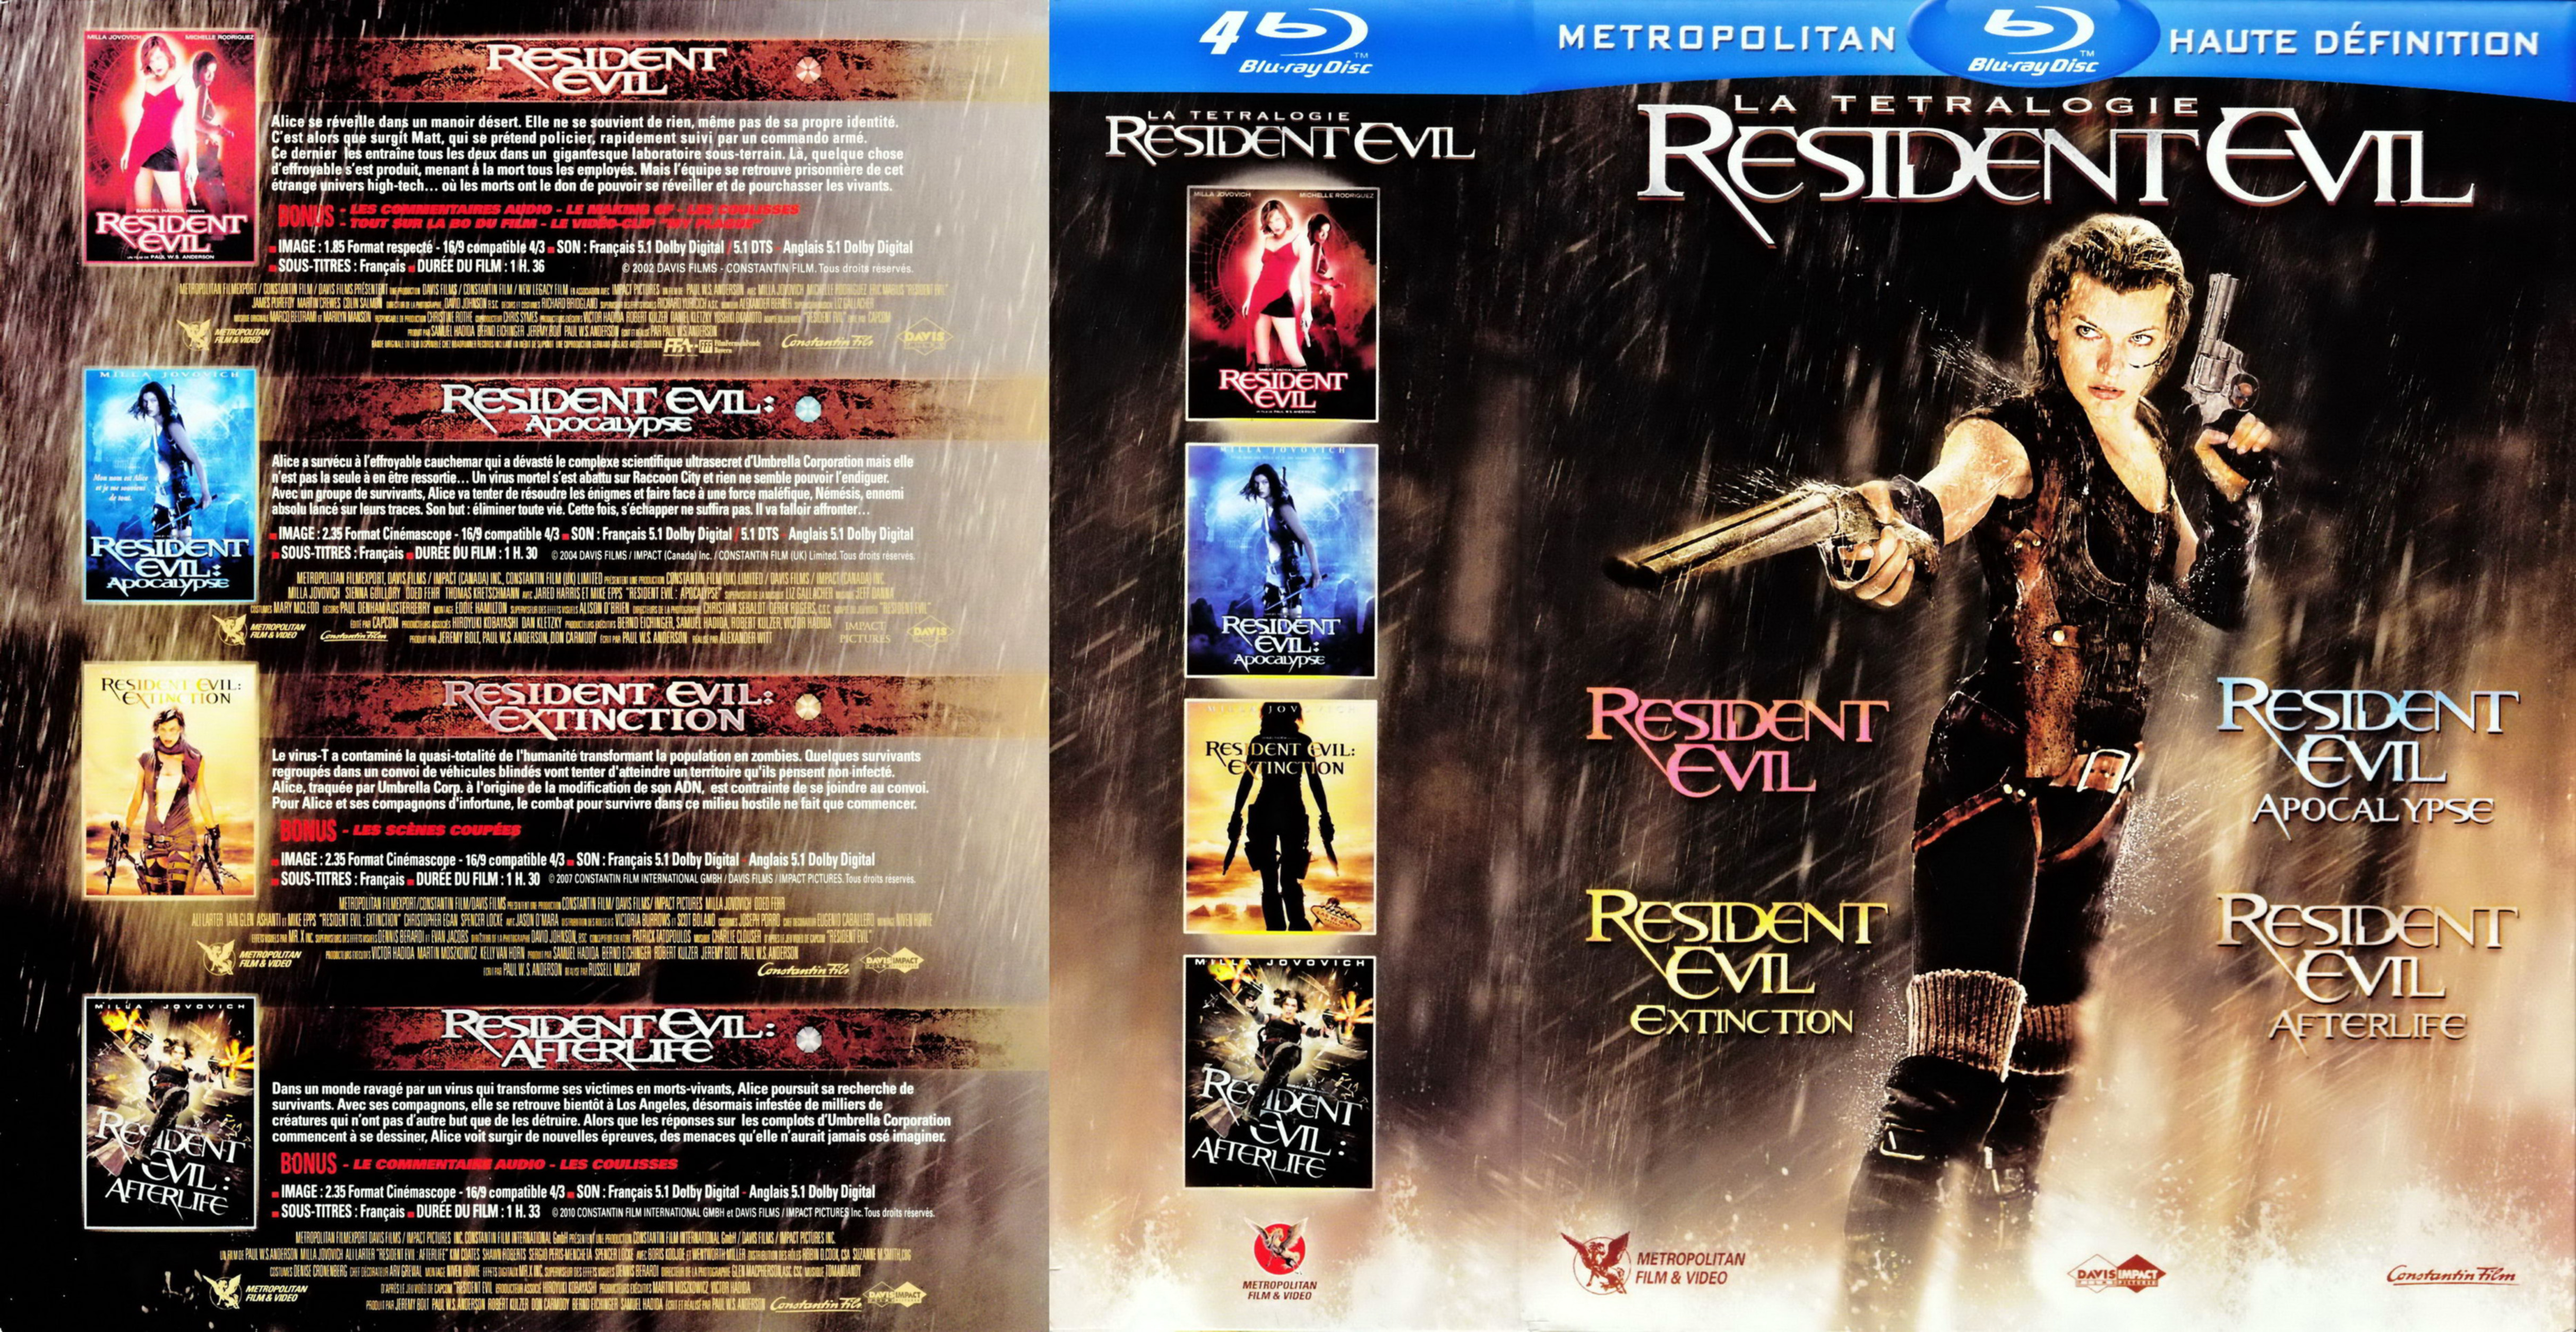 Jaquette DVD Resident evil tetralogie (BLU-RAY)